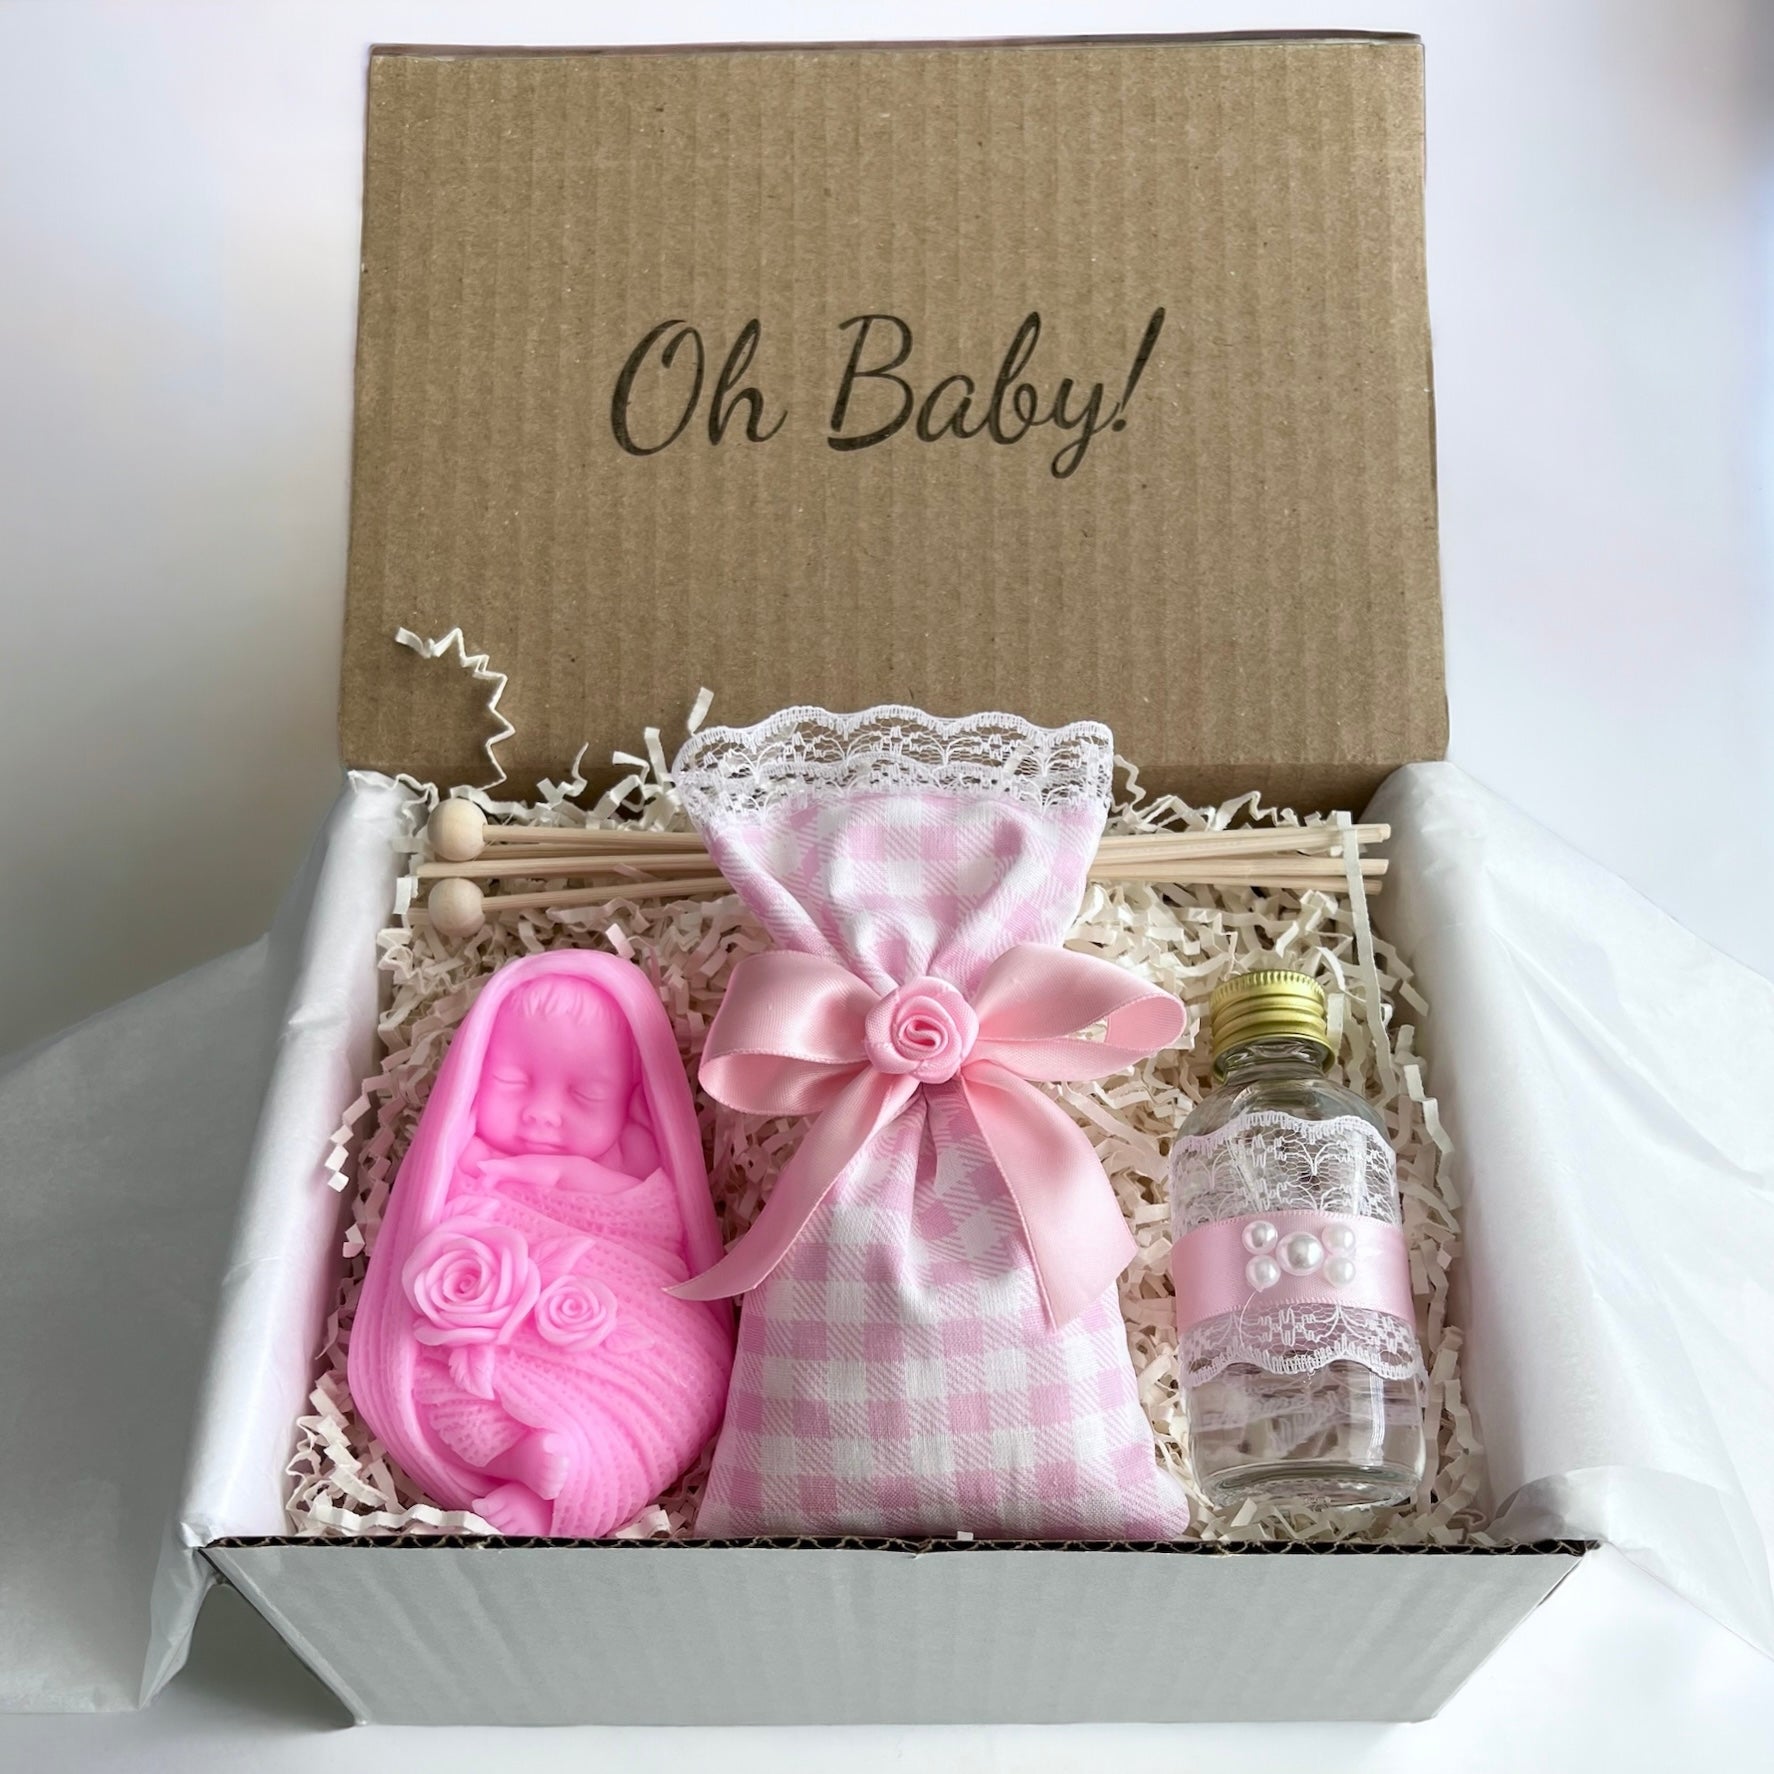 Oh Baby! Gift Set Box BOY/GIRL